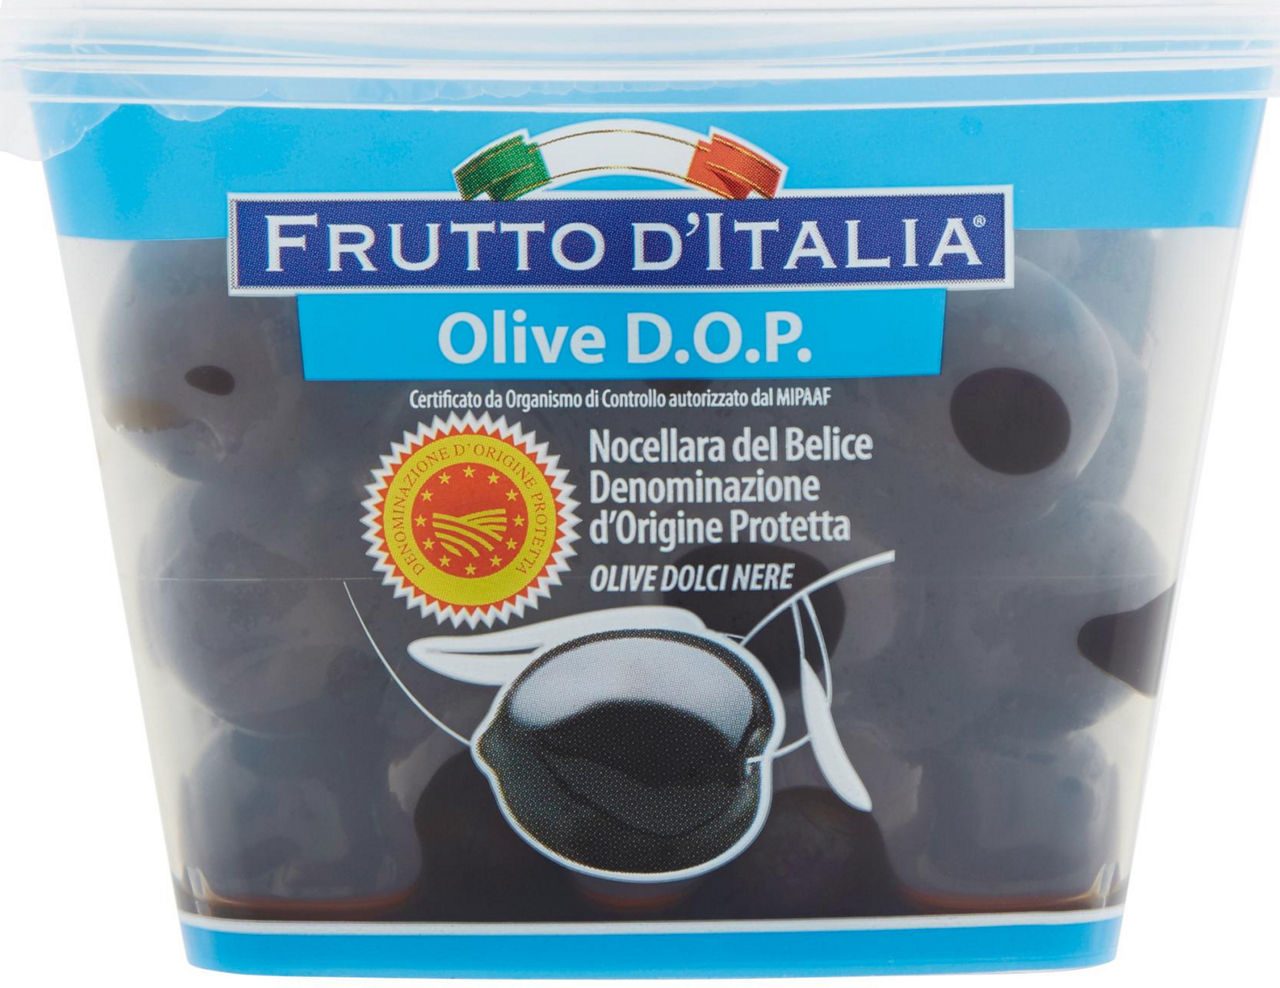 Olive dolci nere D.O.P. Nocellara del Belice Olive 250 g - 0